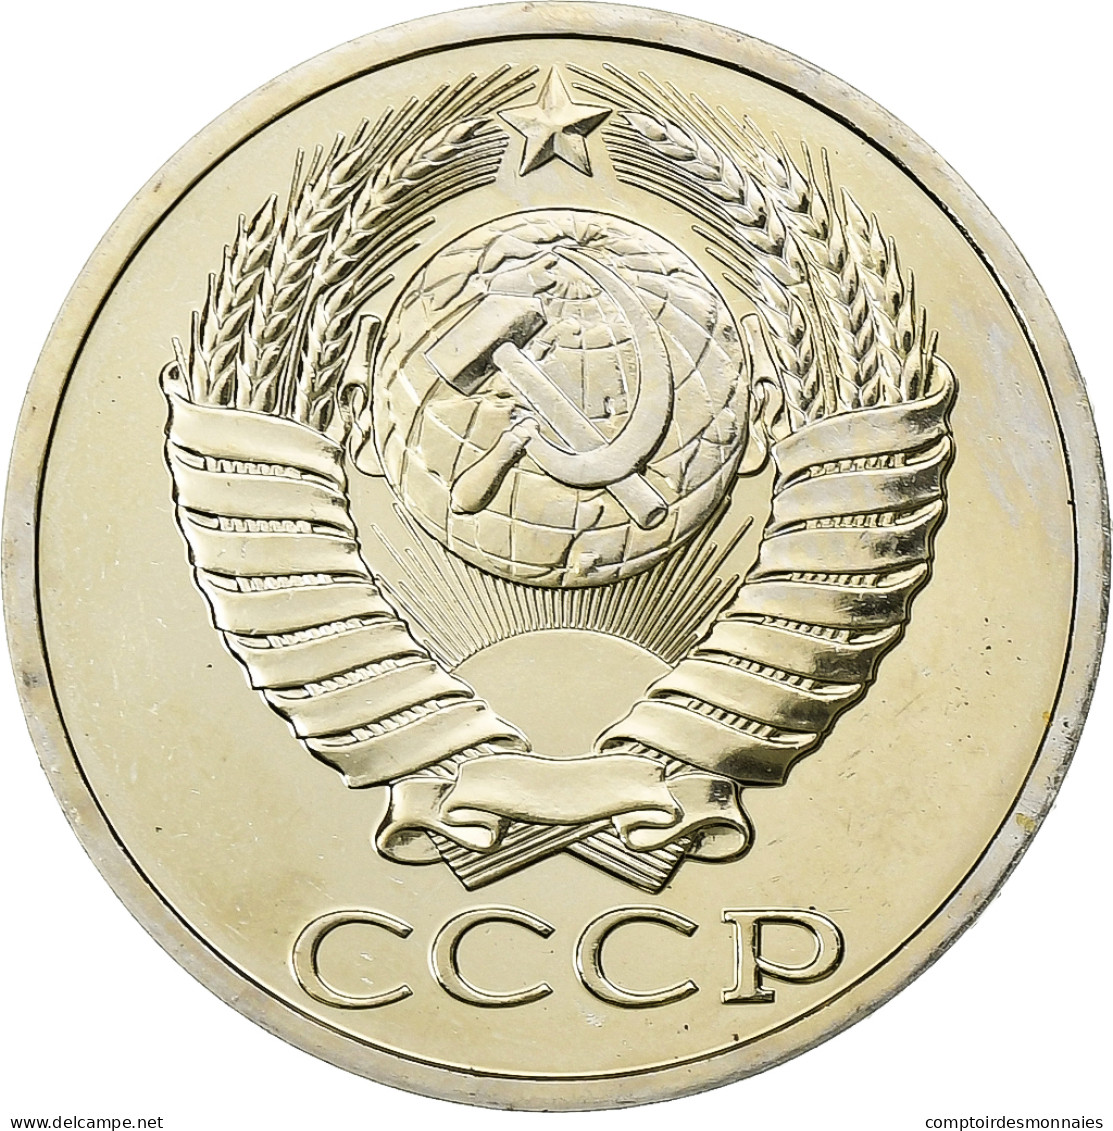 Russie, 50 Kopeks, 1988, Cuivre-Nickel-Zinc (Maillechort), SPL, KM:133a.2 - Russia